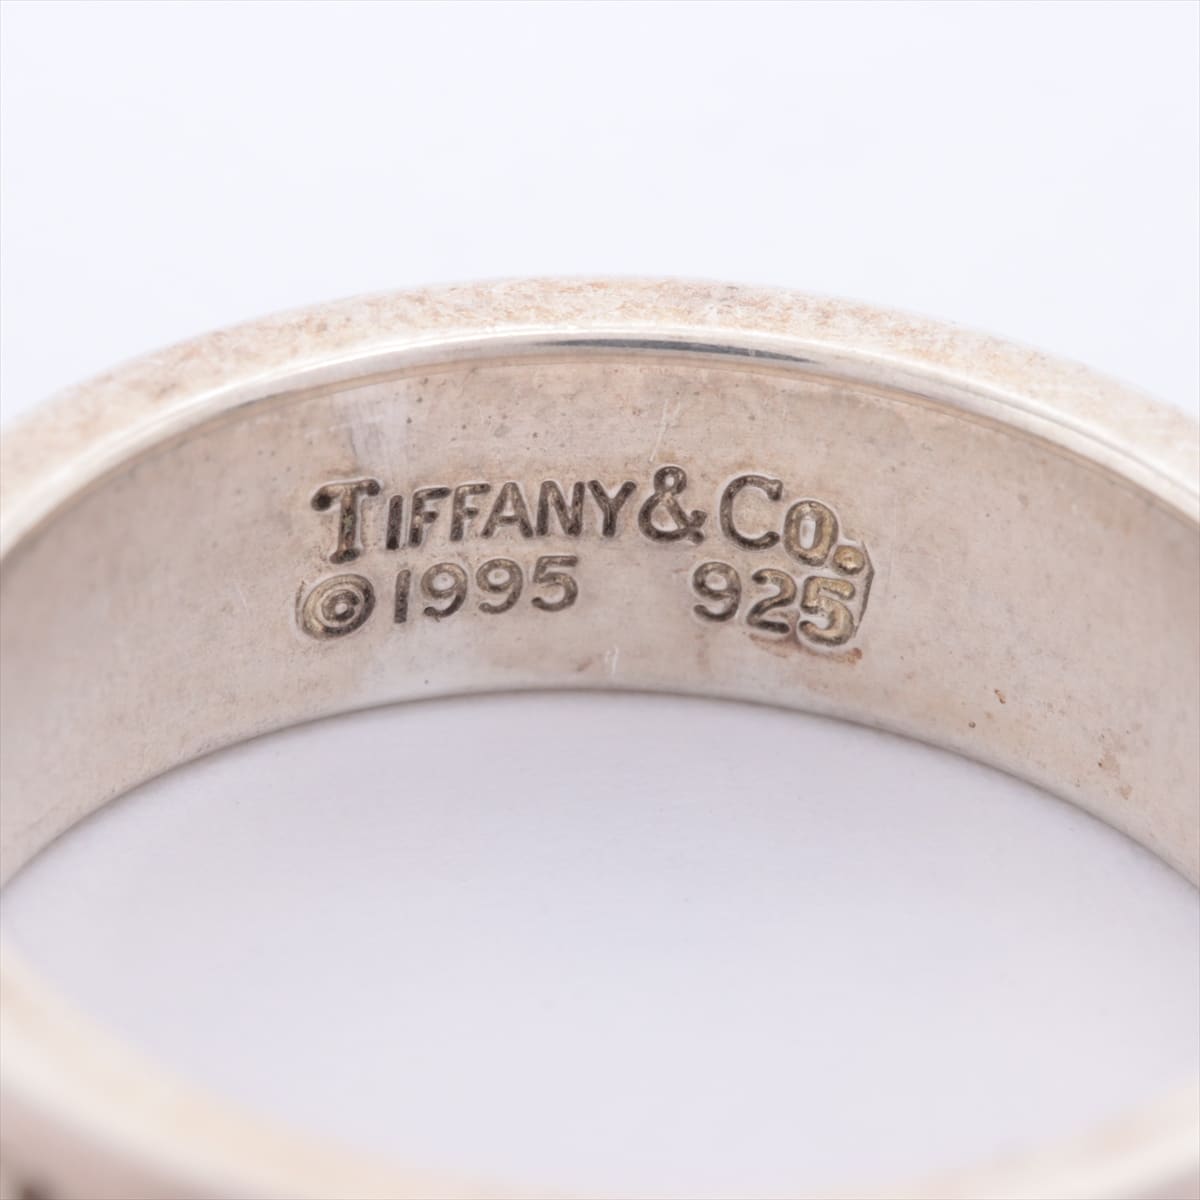 Tiffany Atlas rings 925 6.6g Silver